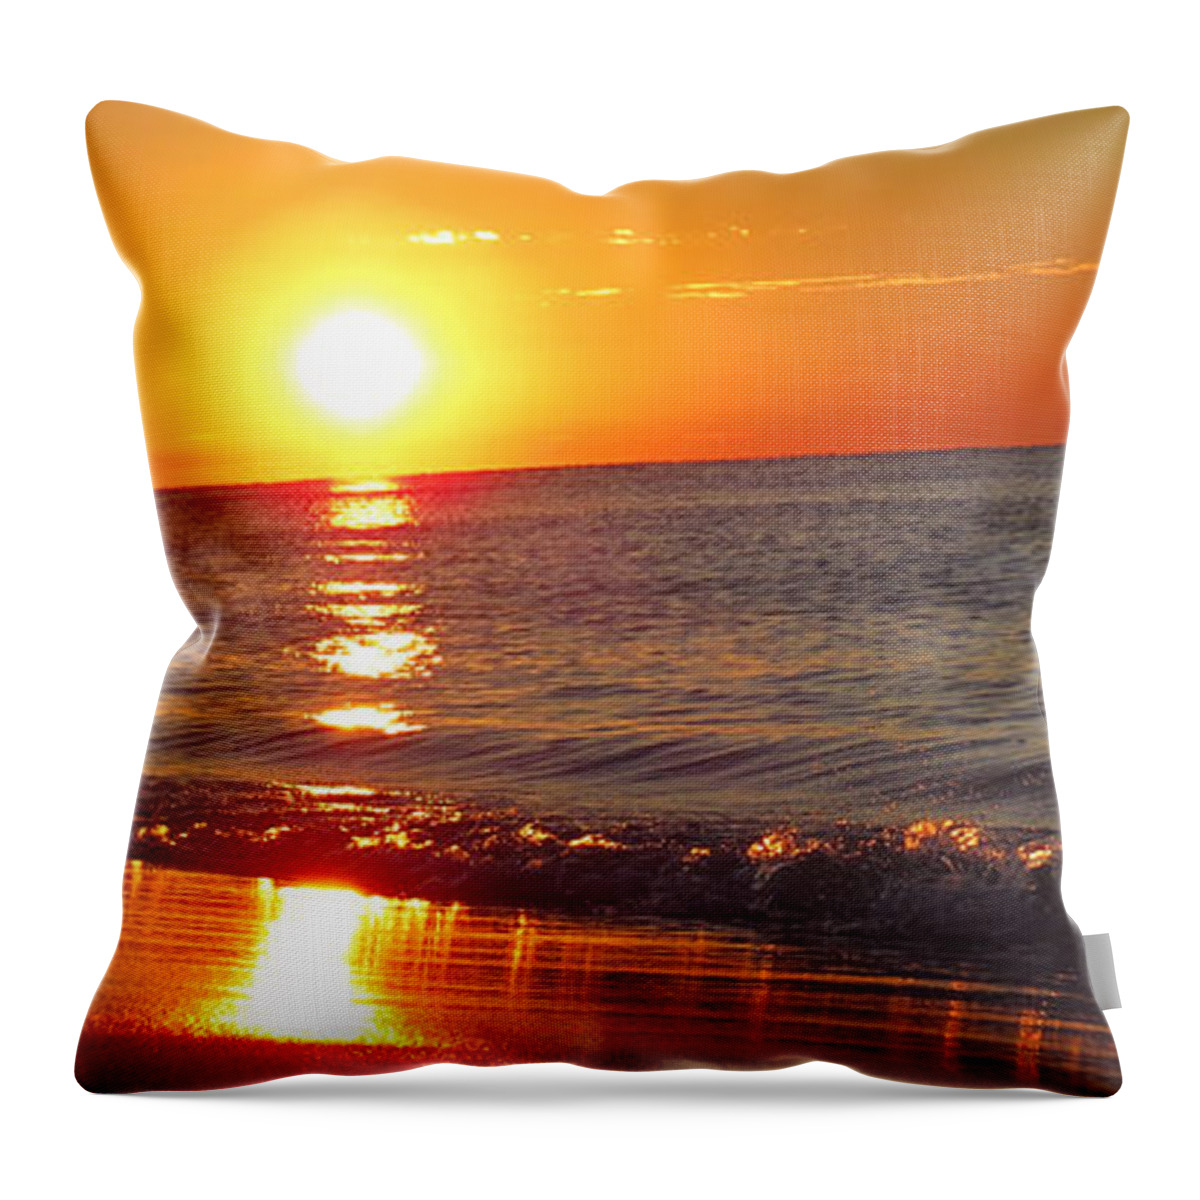 Sunrise Throw Pillow featuring the digital art Sunrise by Kathleen Illes